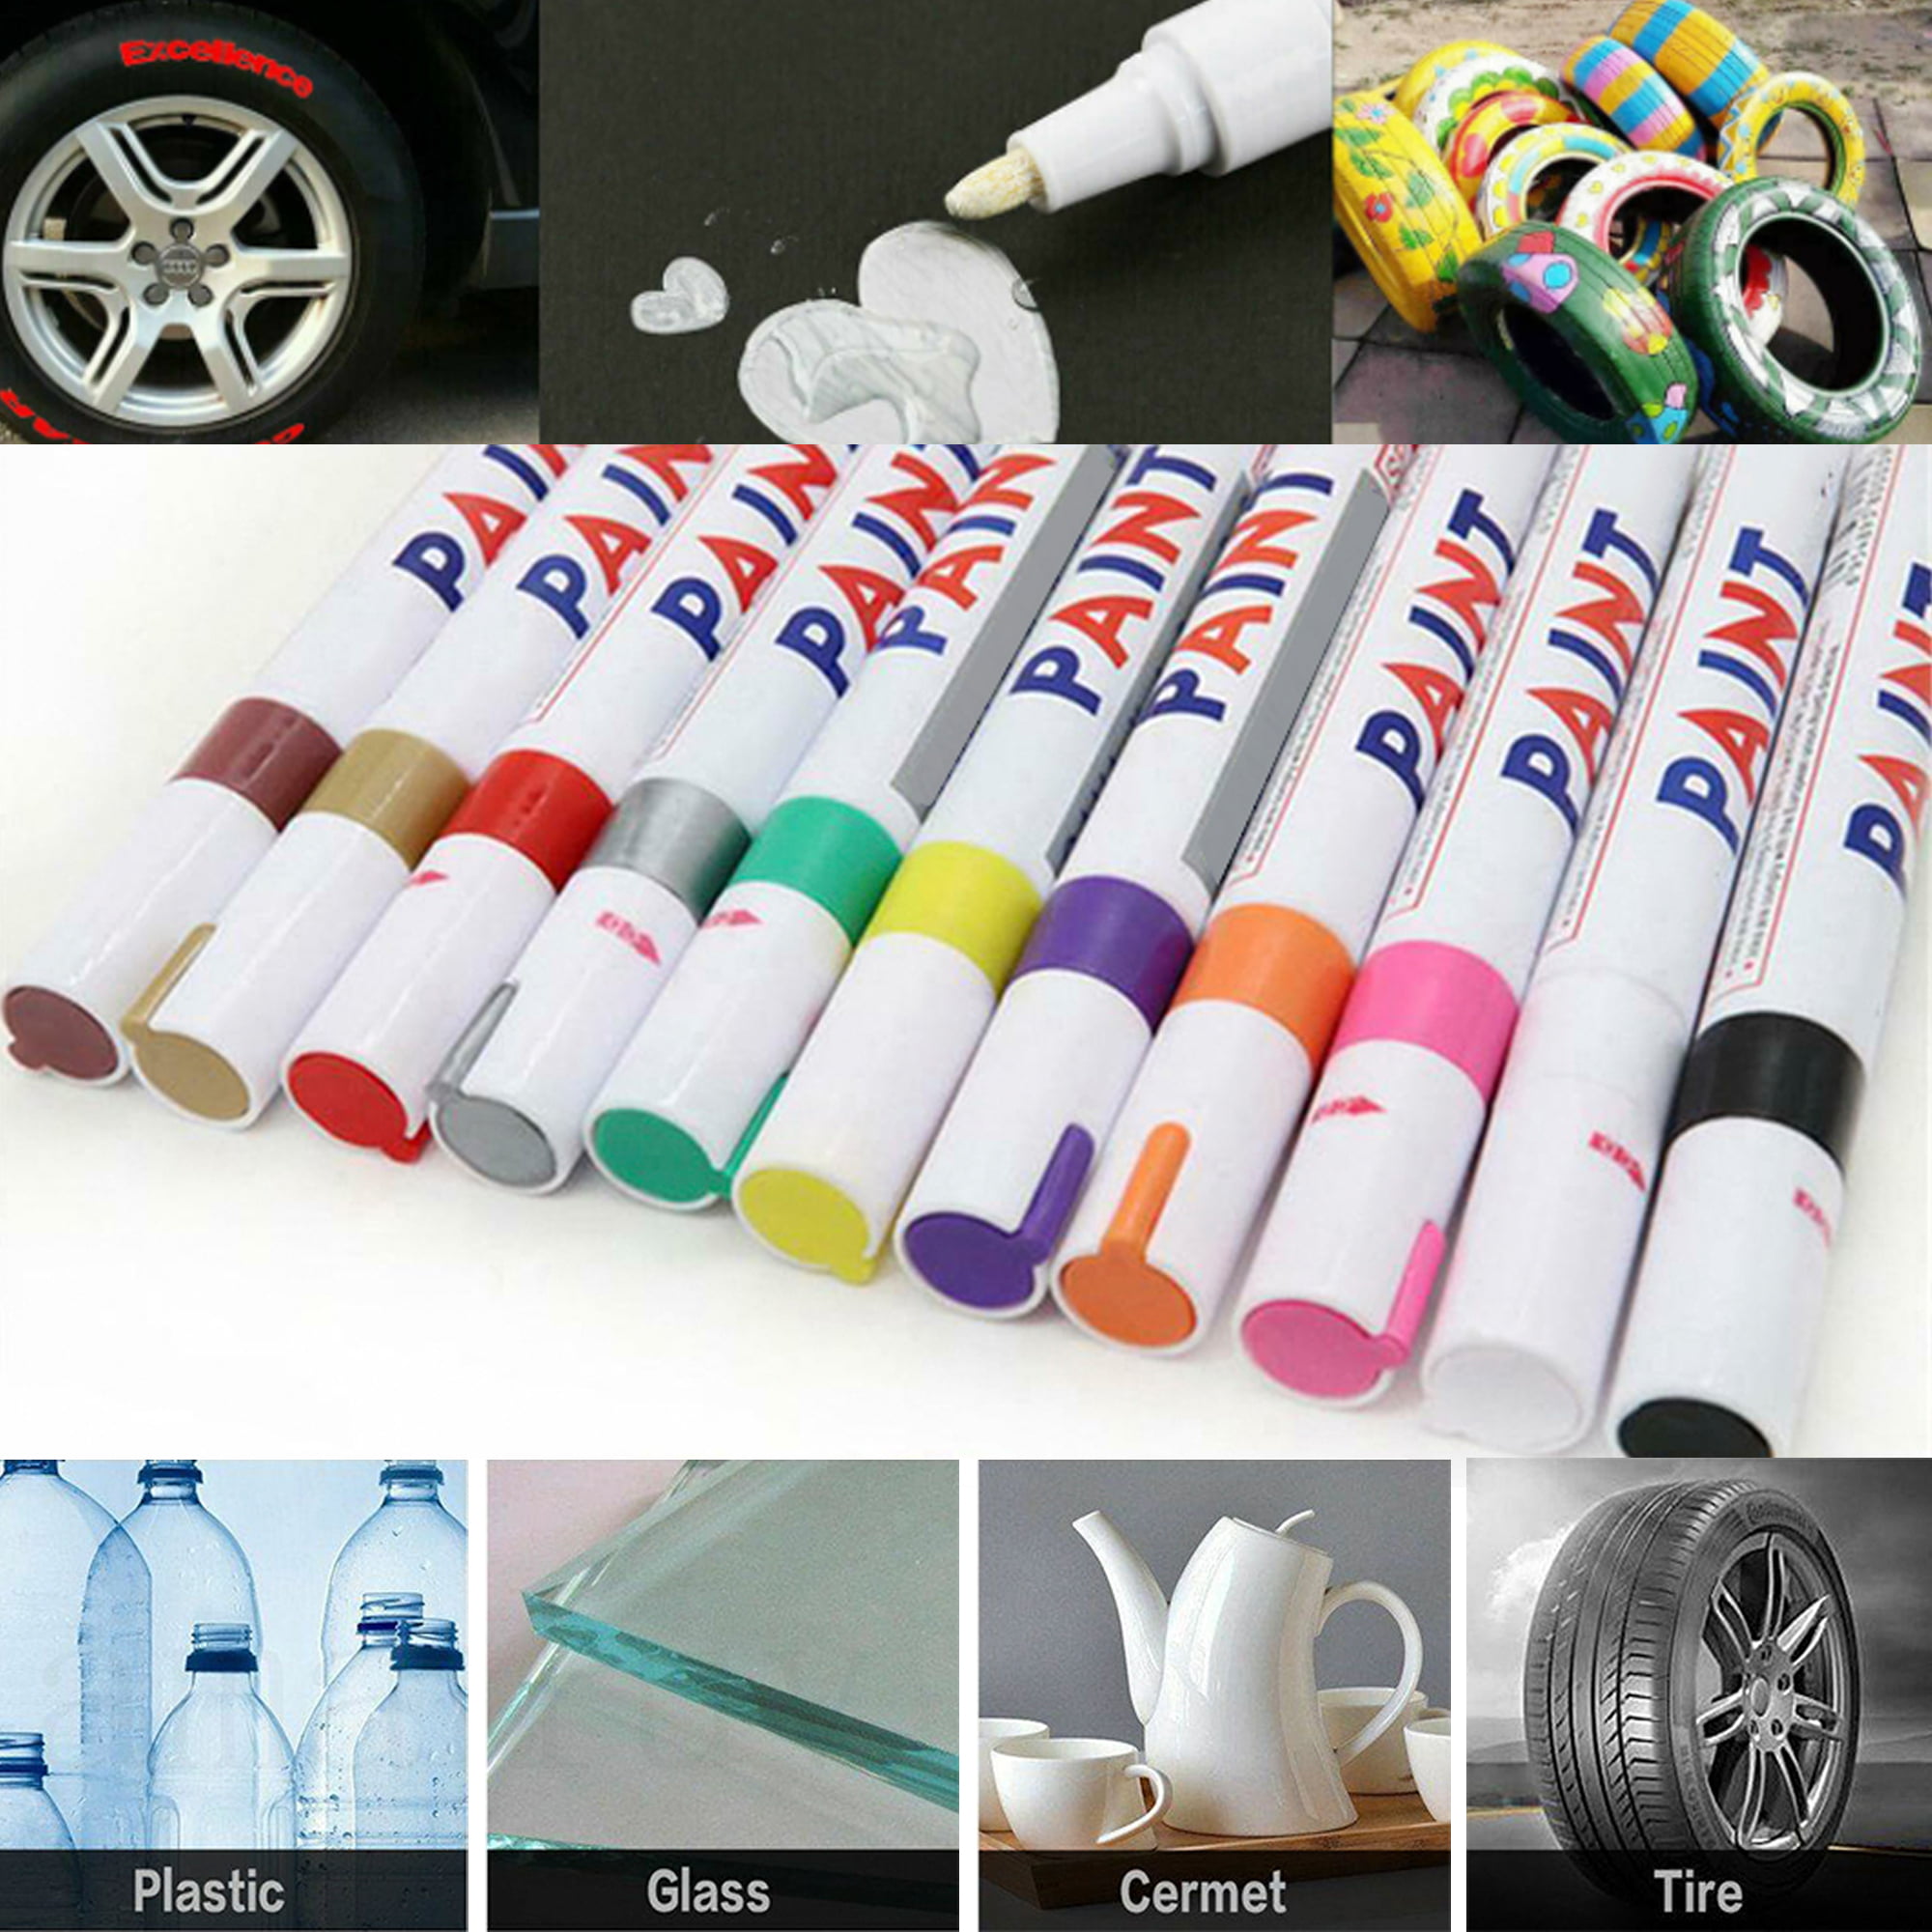 SUPKIZ Paint Pen Paint Markers, 12 Colors Oil-Based Waterproof Marker Pens, Permanent Fabric Paint Quick Dry Marker for Metal, Egg, Tire, Rock, Wood